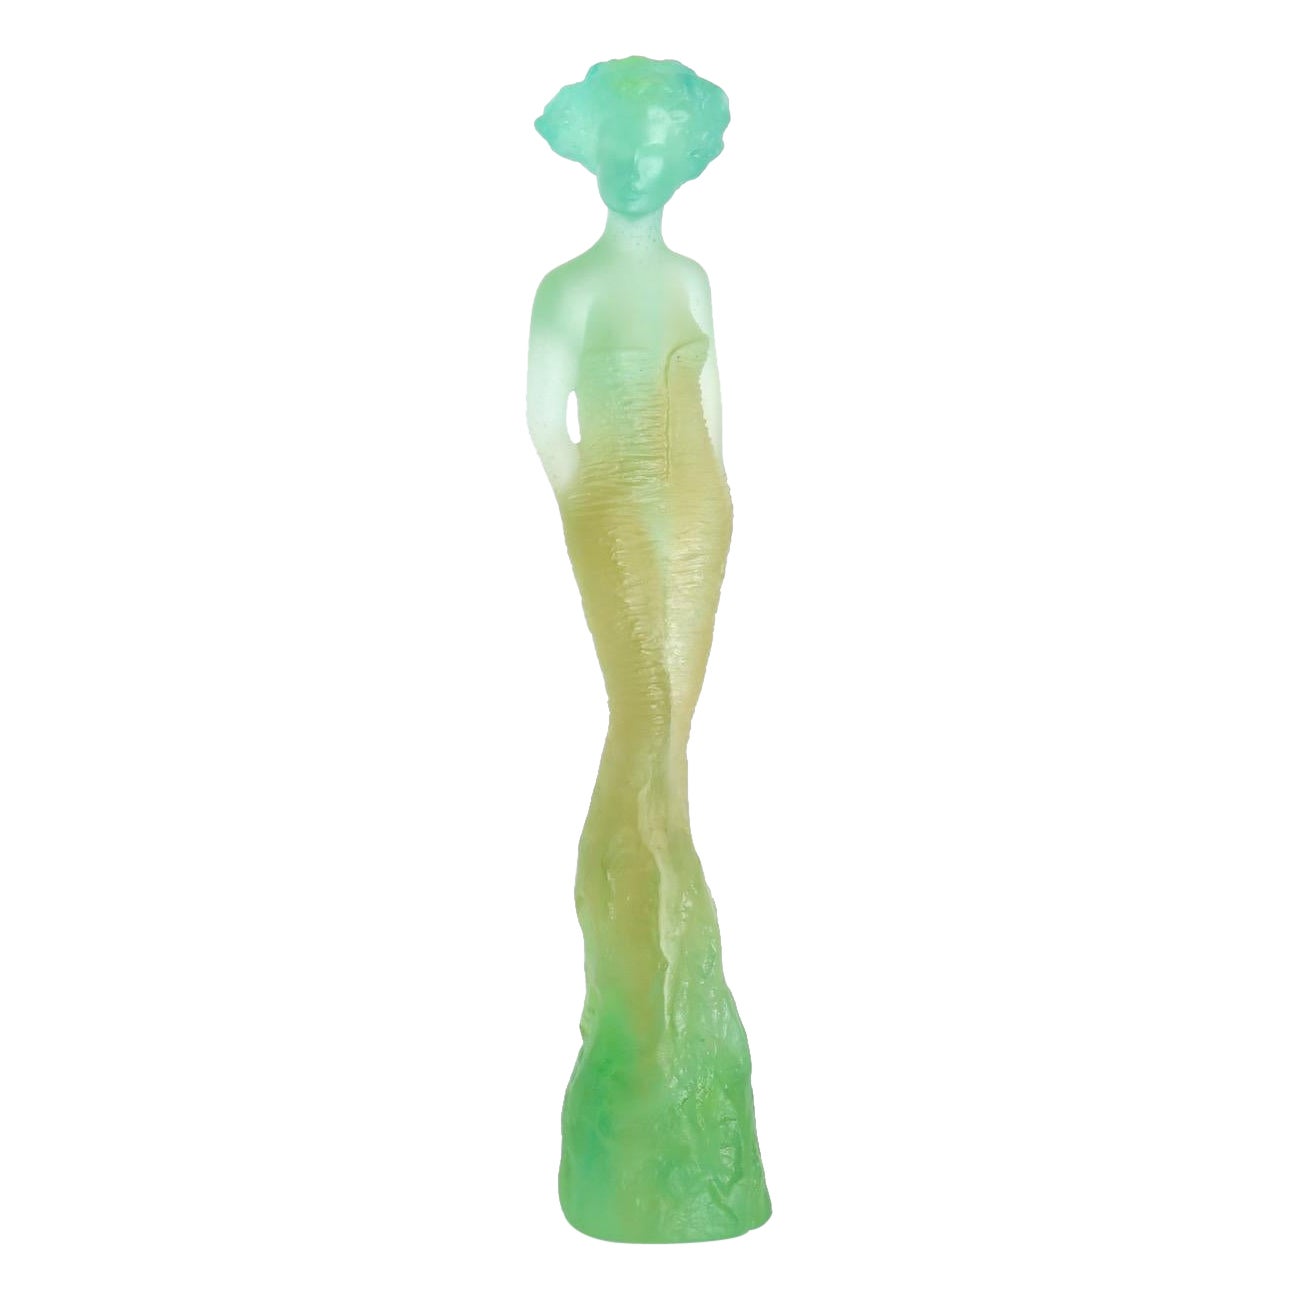 Daum "Eleonore" Pate de Verre Crystal Sculpture Limited Edition 122 of 425